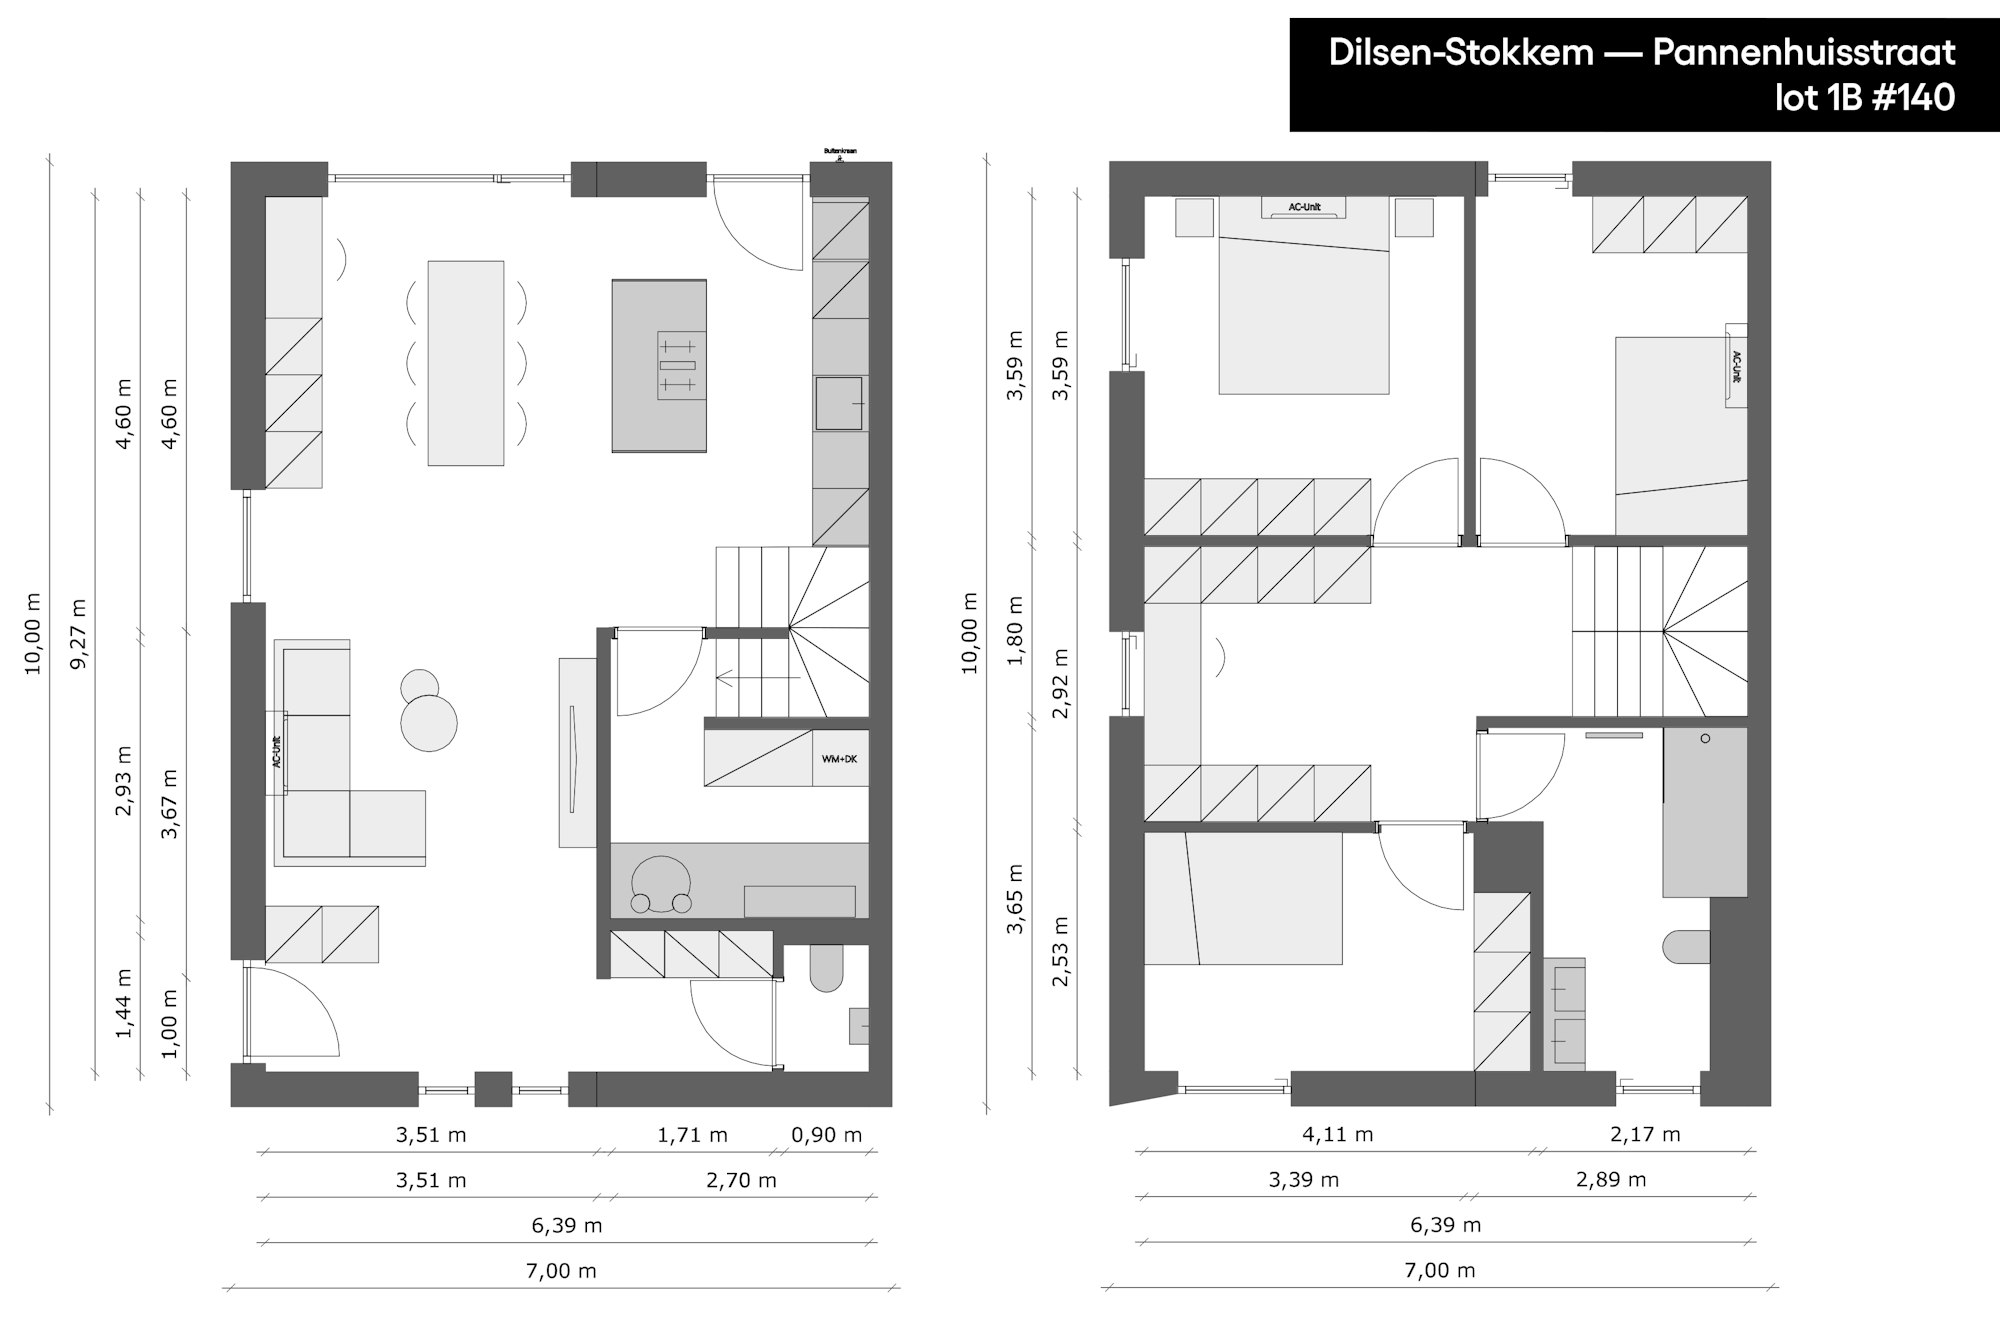 Skilpod nieuwbouwproject Dilsen-Stokkem Pannenhuisstraat plan